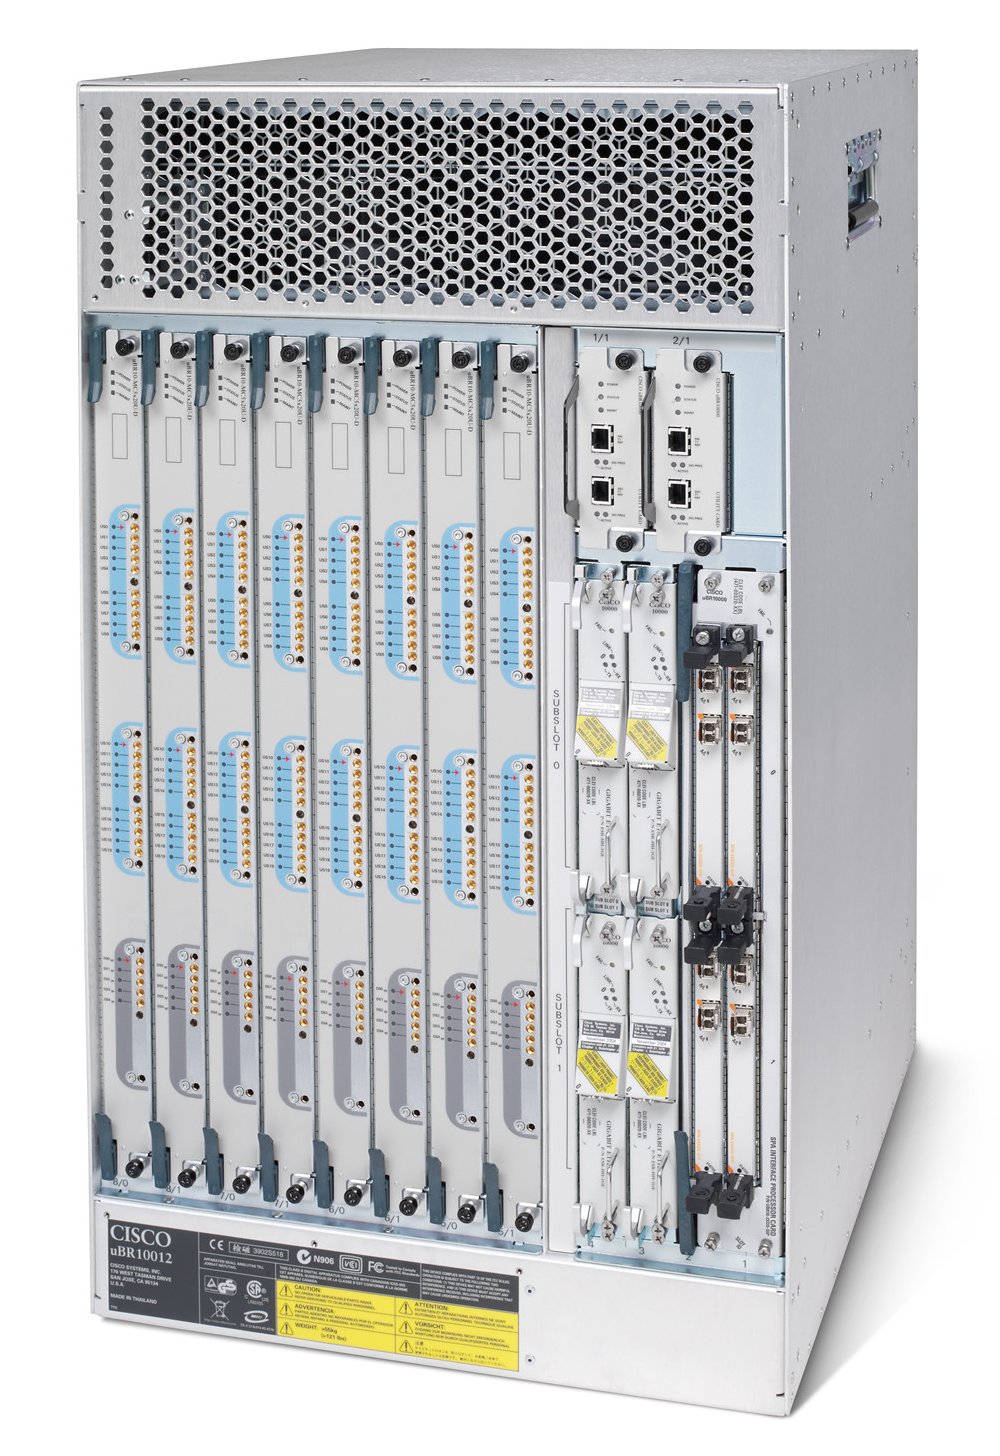 Alternate product image of Cisco uBR10012 Universal Broadband Router